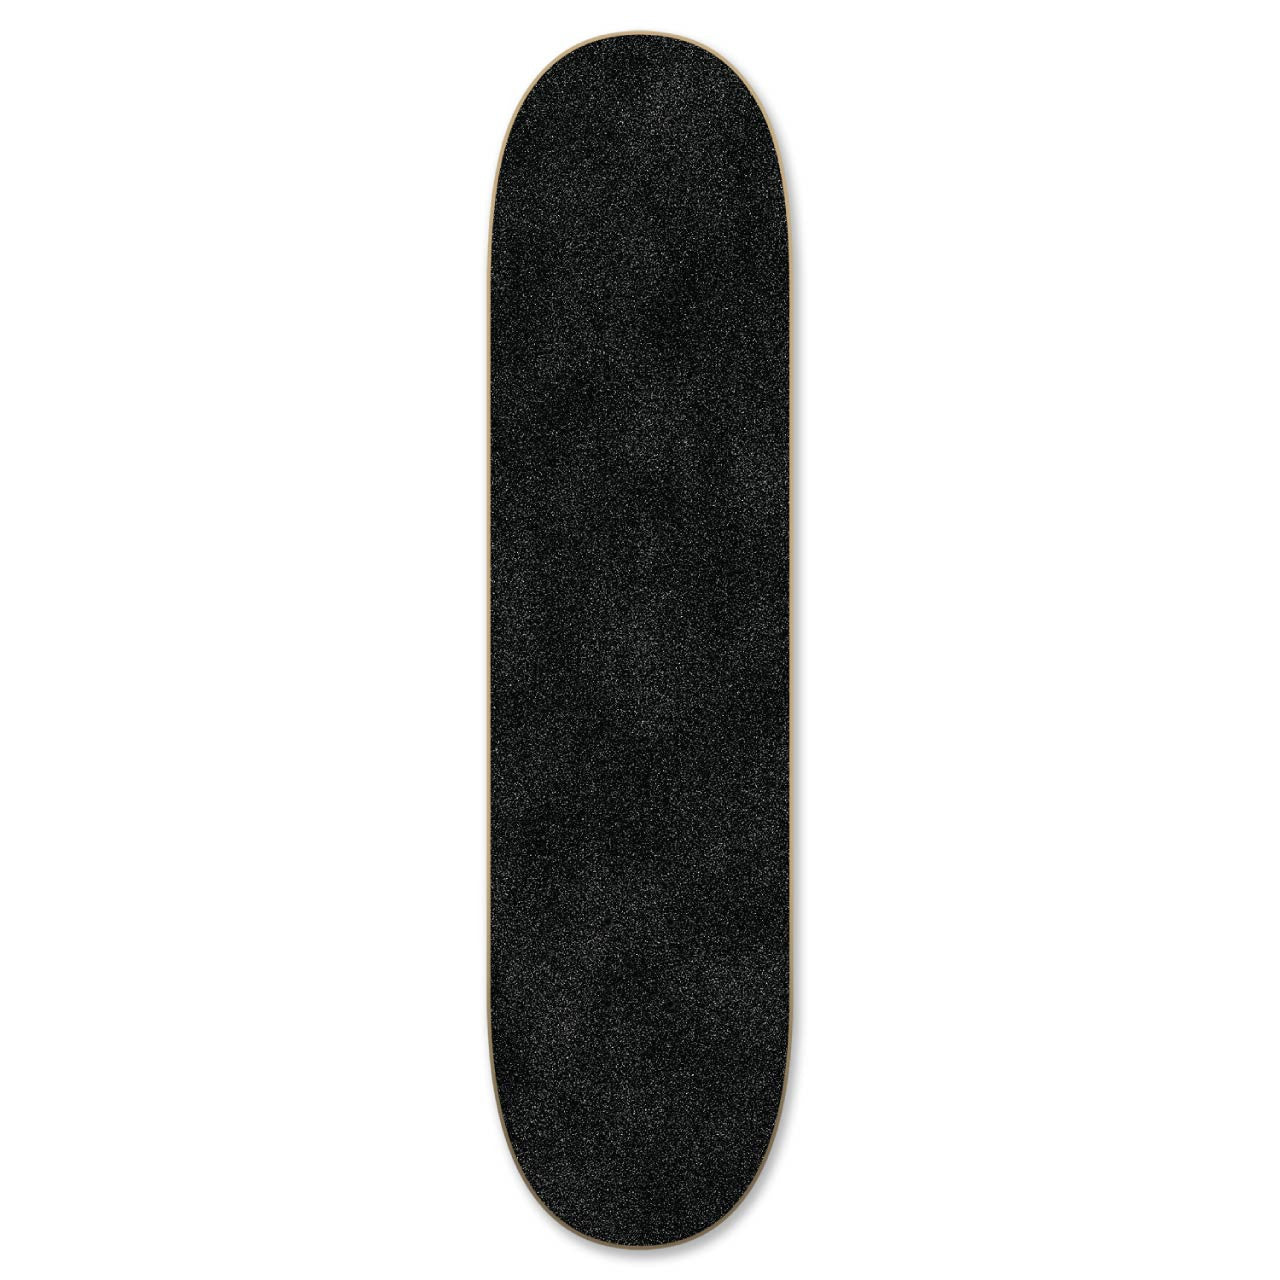 Graphic Skateboard Deck - Checker Blue